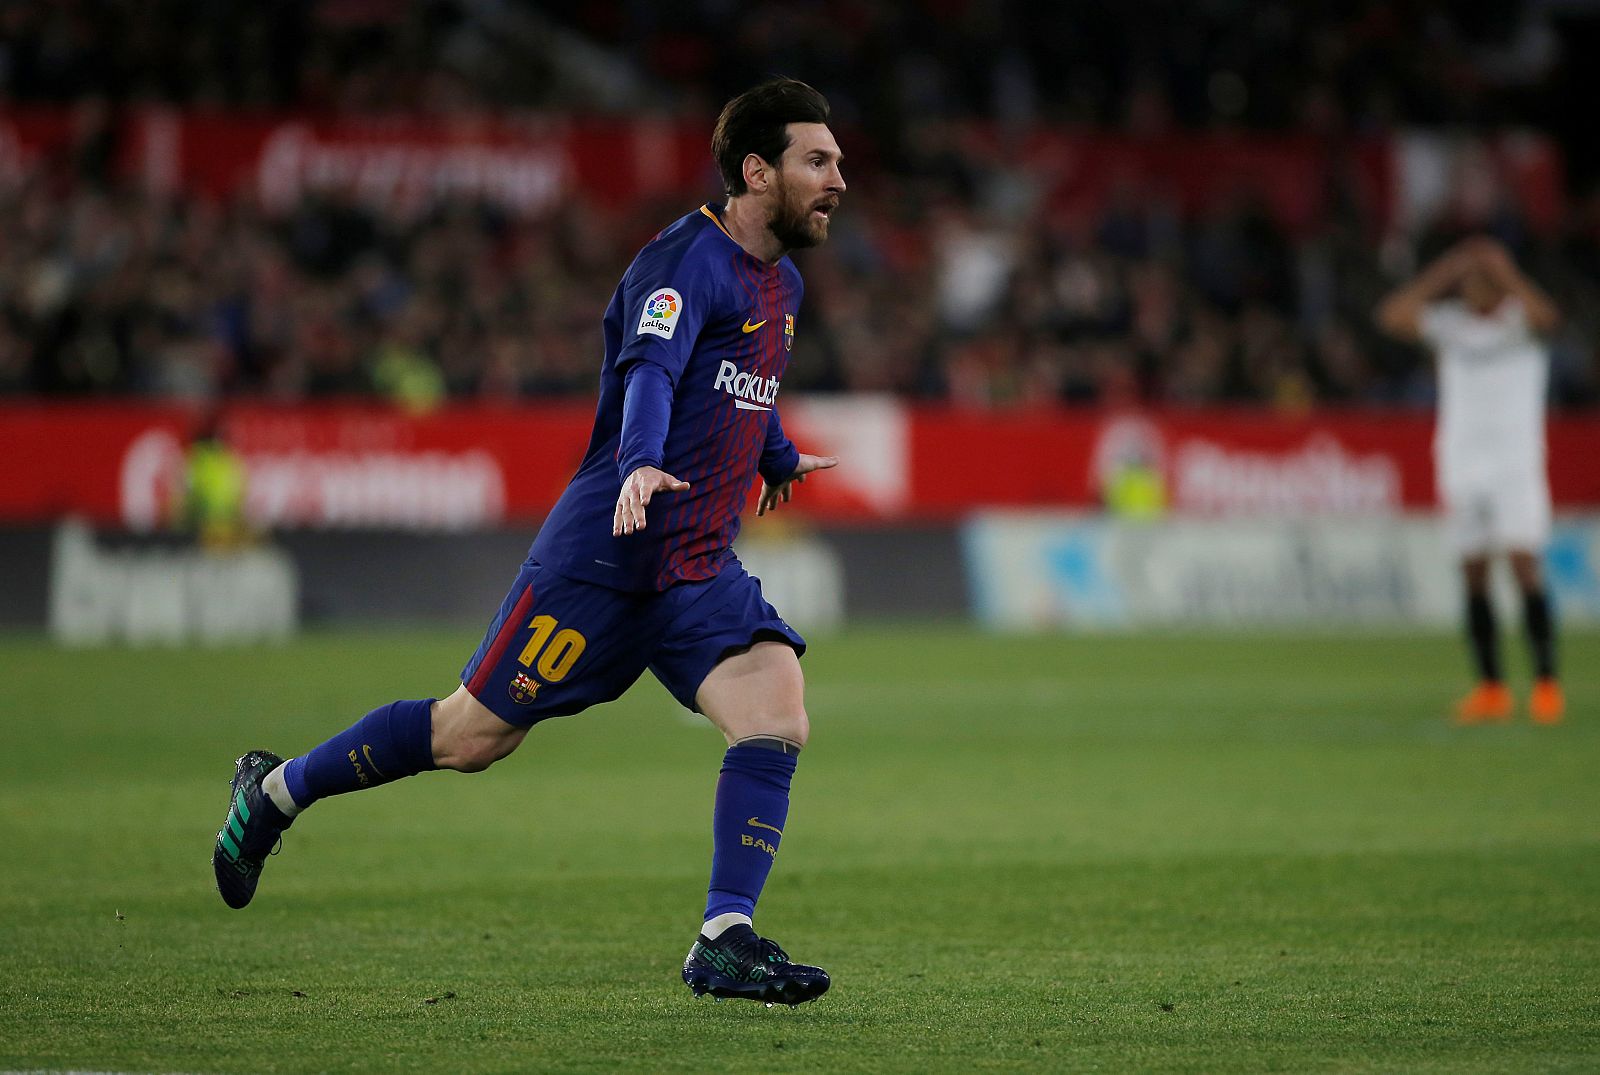 Messi celebra el gol del empate